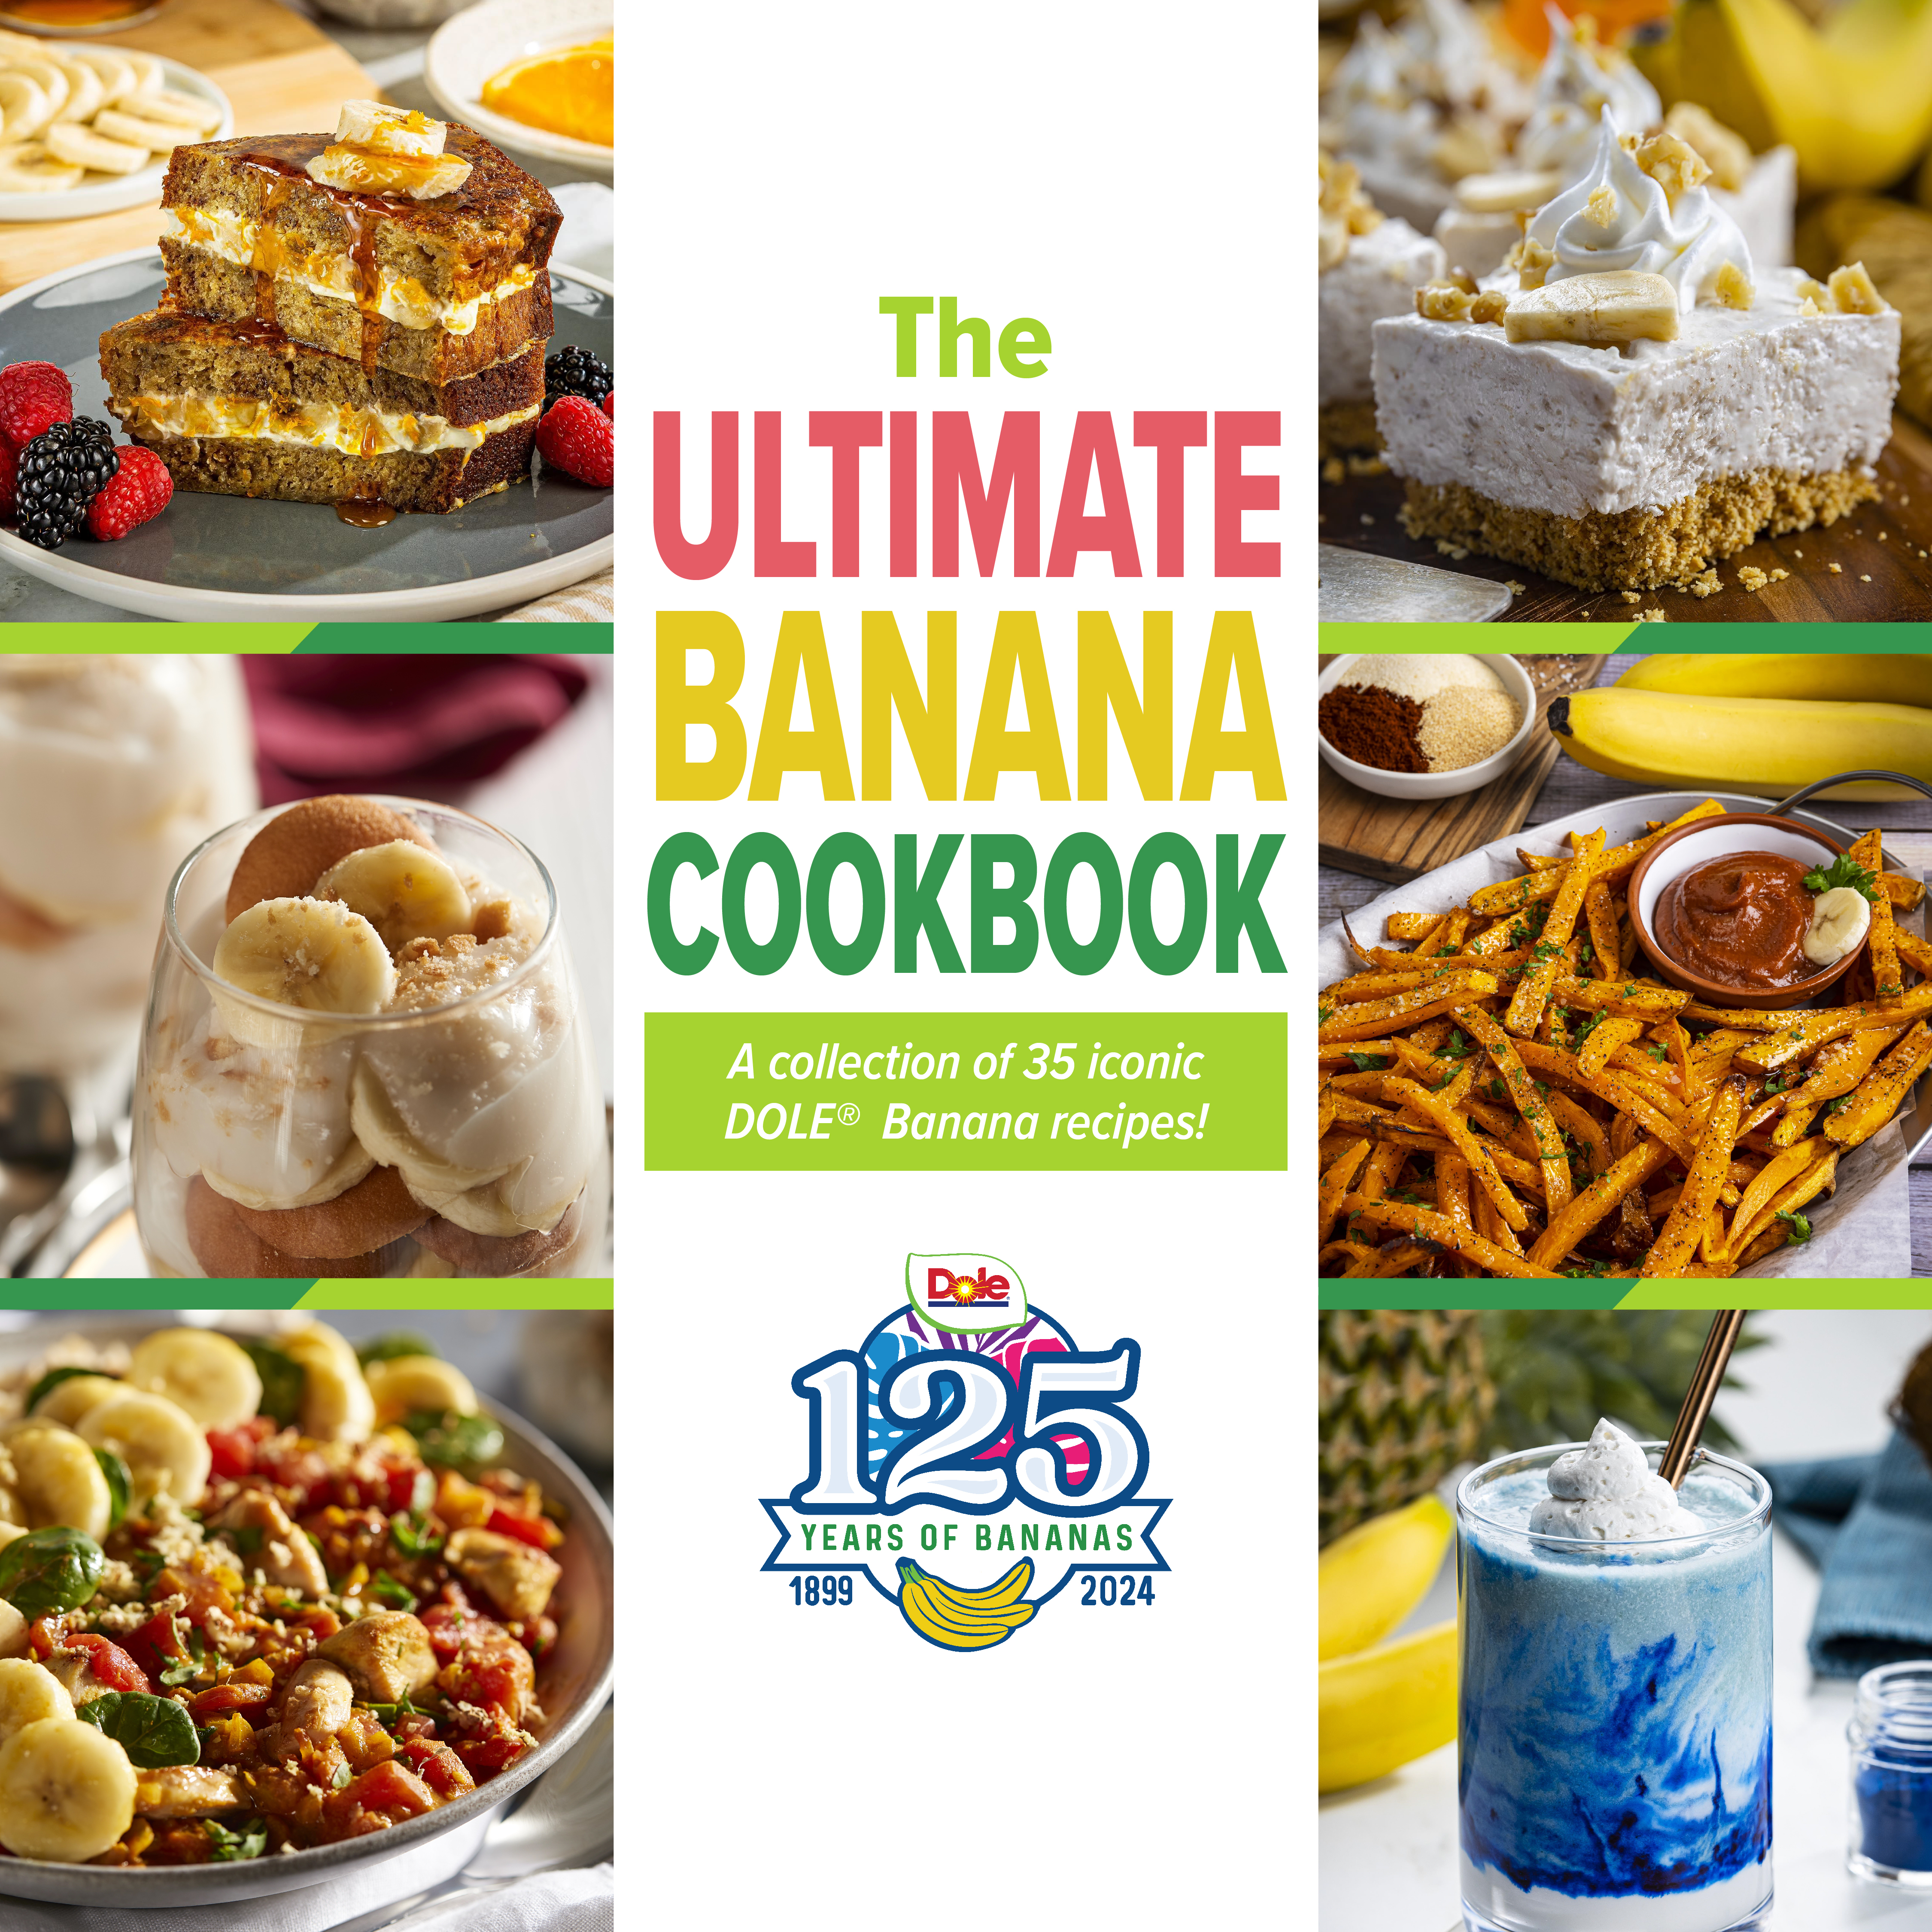 The Ultimate Banana Cookbook